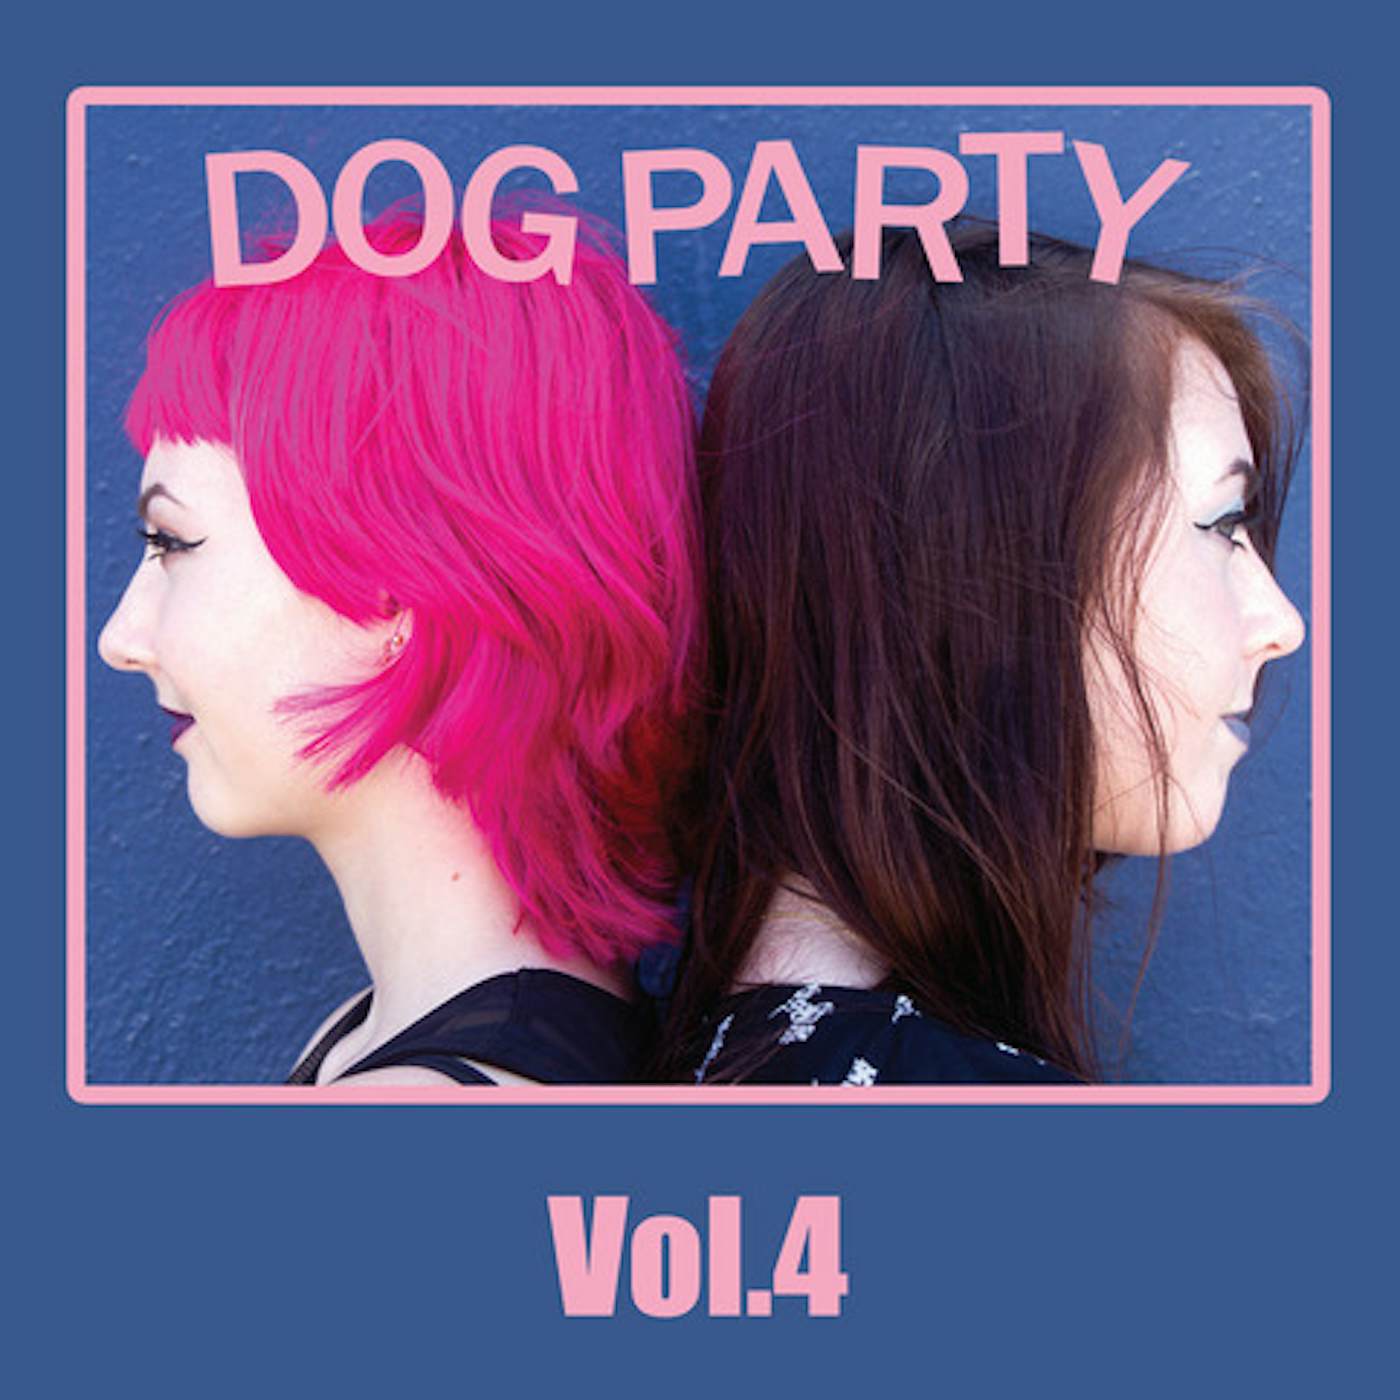 Dog Party VOL.4 Vinyl Record